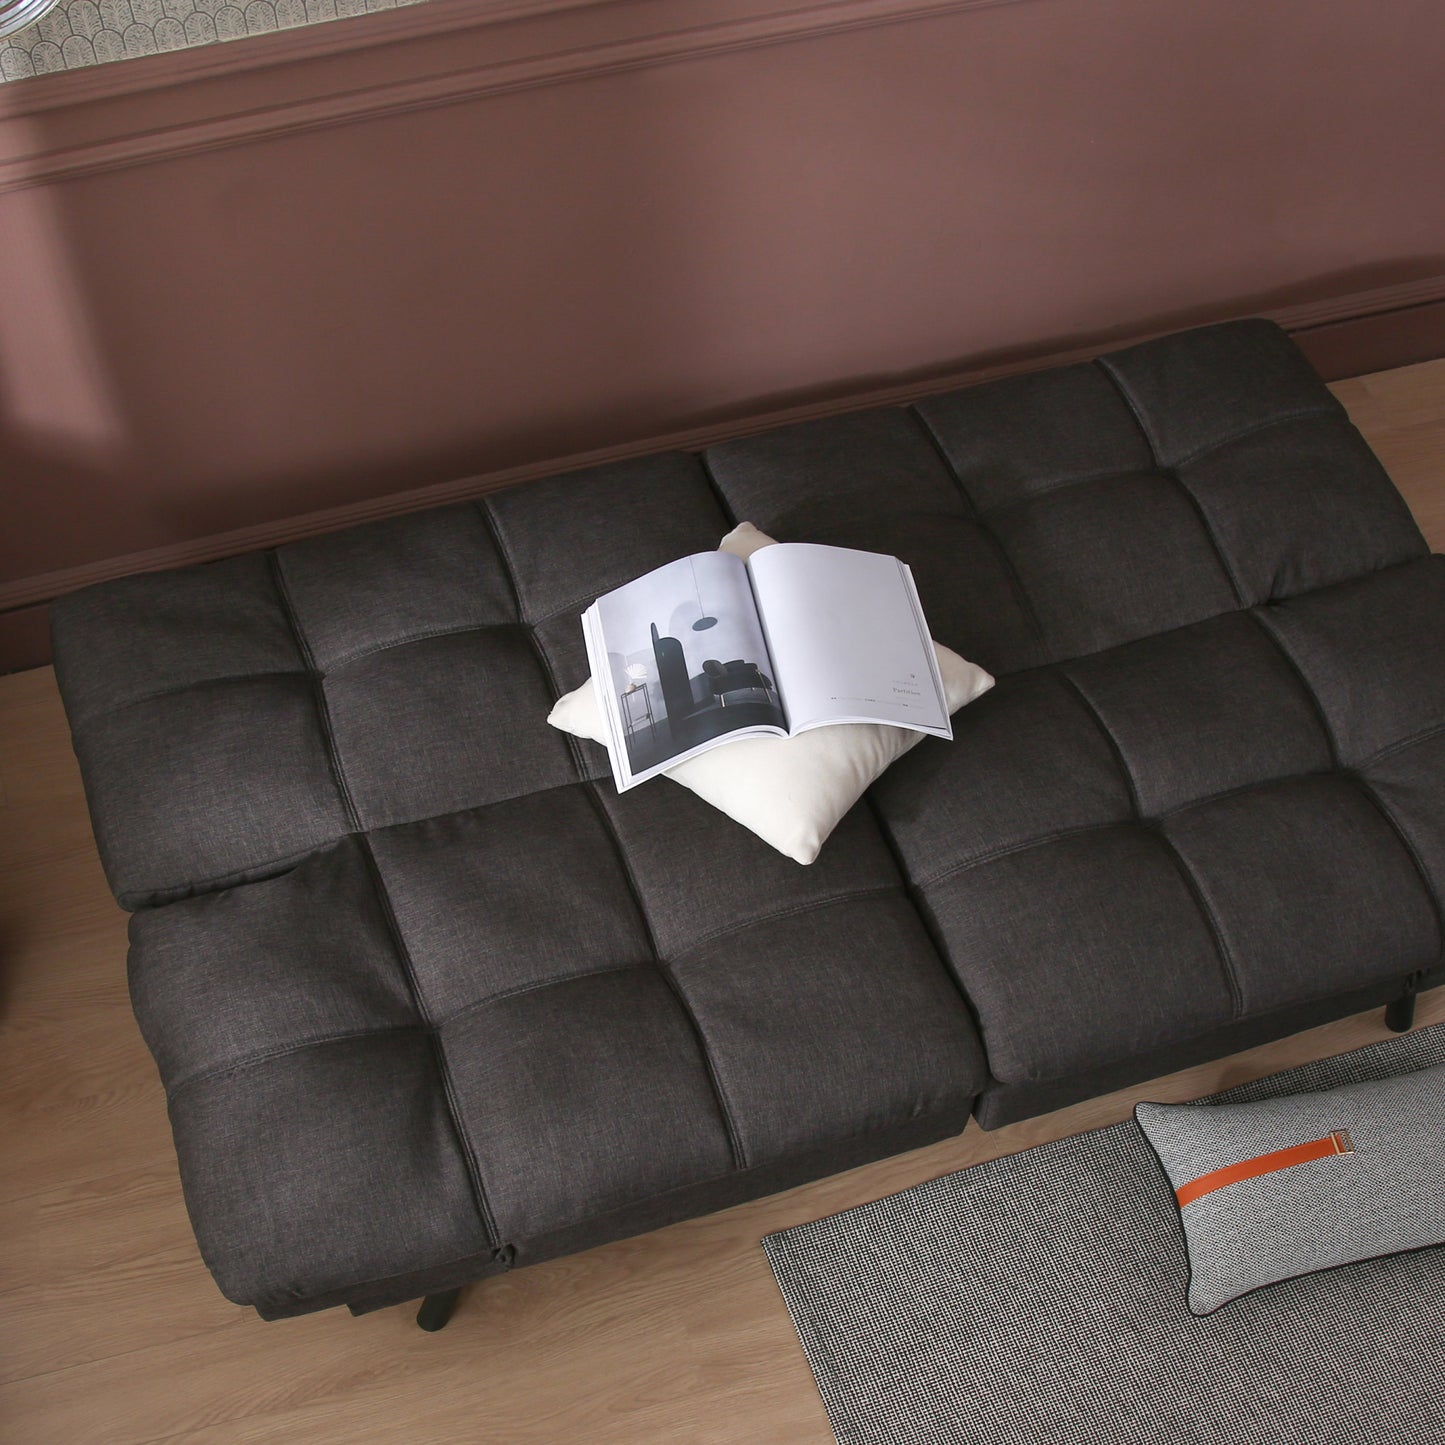 Convertible Memory Foam Futon Couch Bed, Modern Folding Sleeper Sofa-SF267FADGY